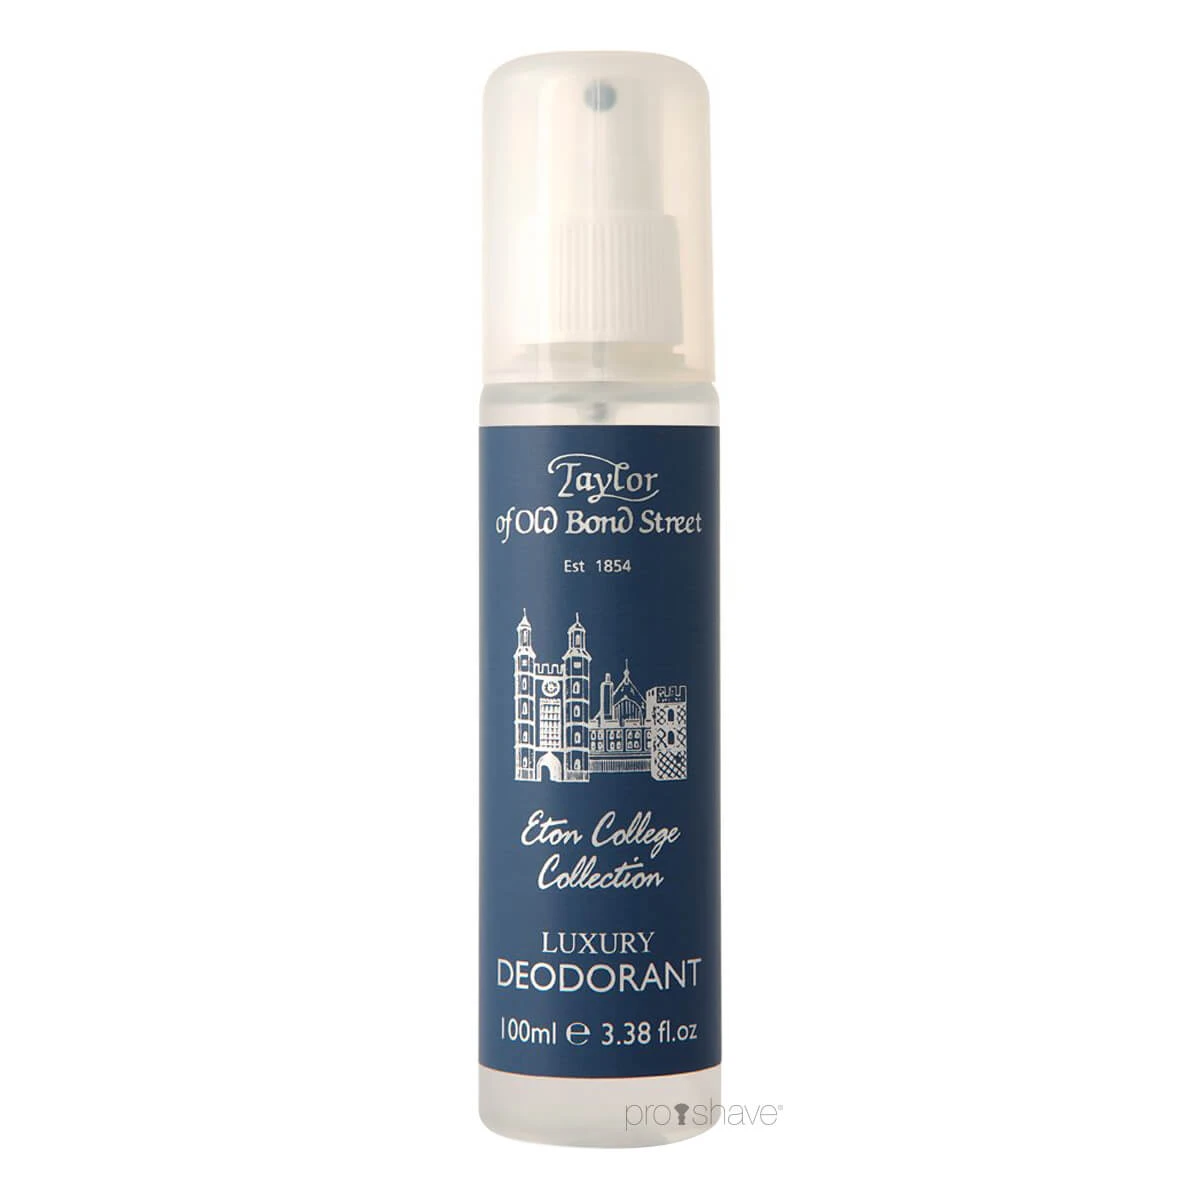 Sandalwood Deodorant spray from Taylor Of Old Bond Street